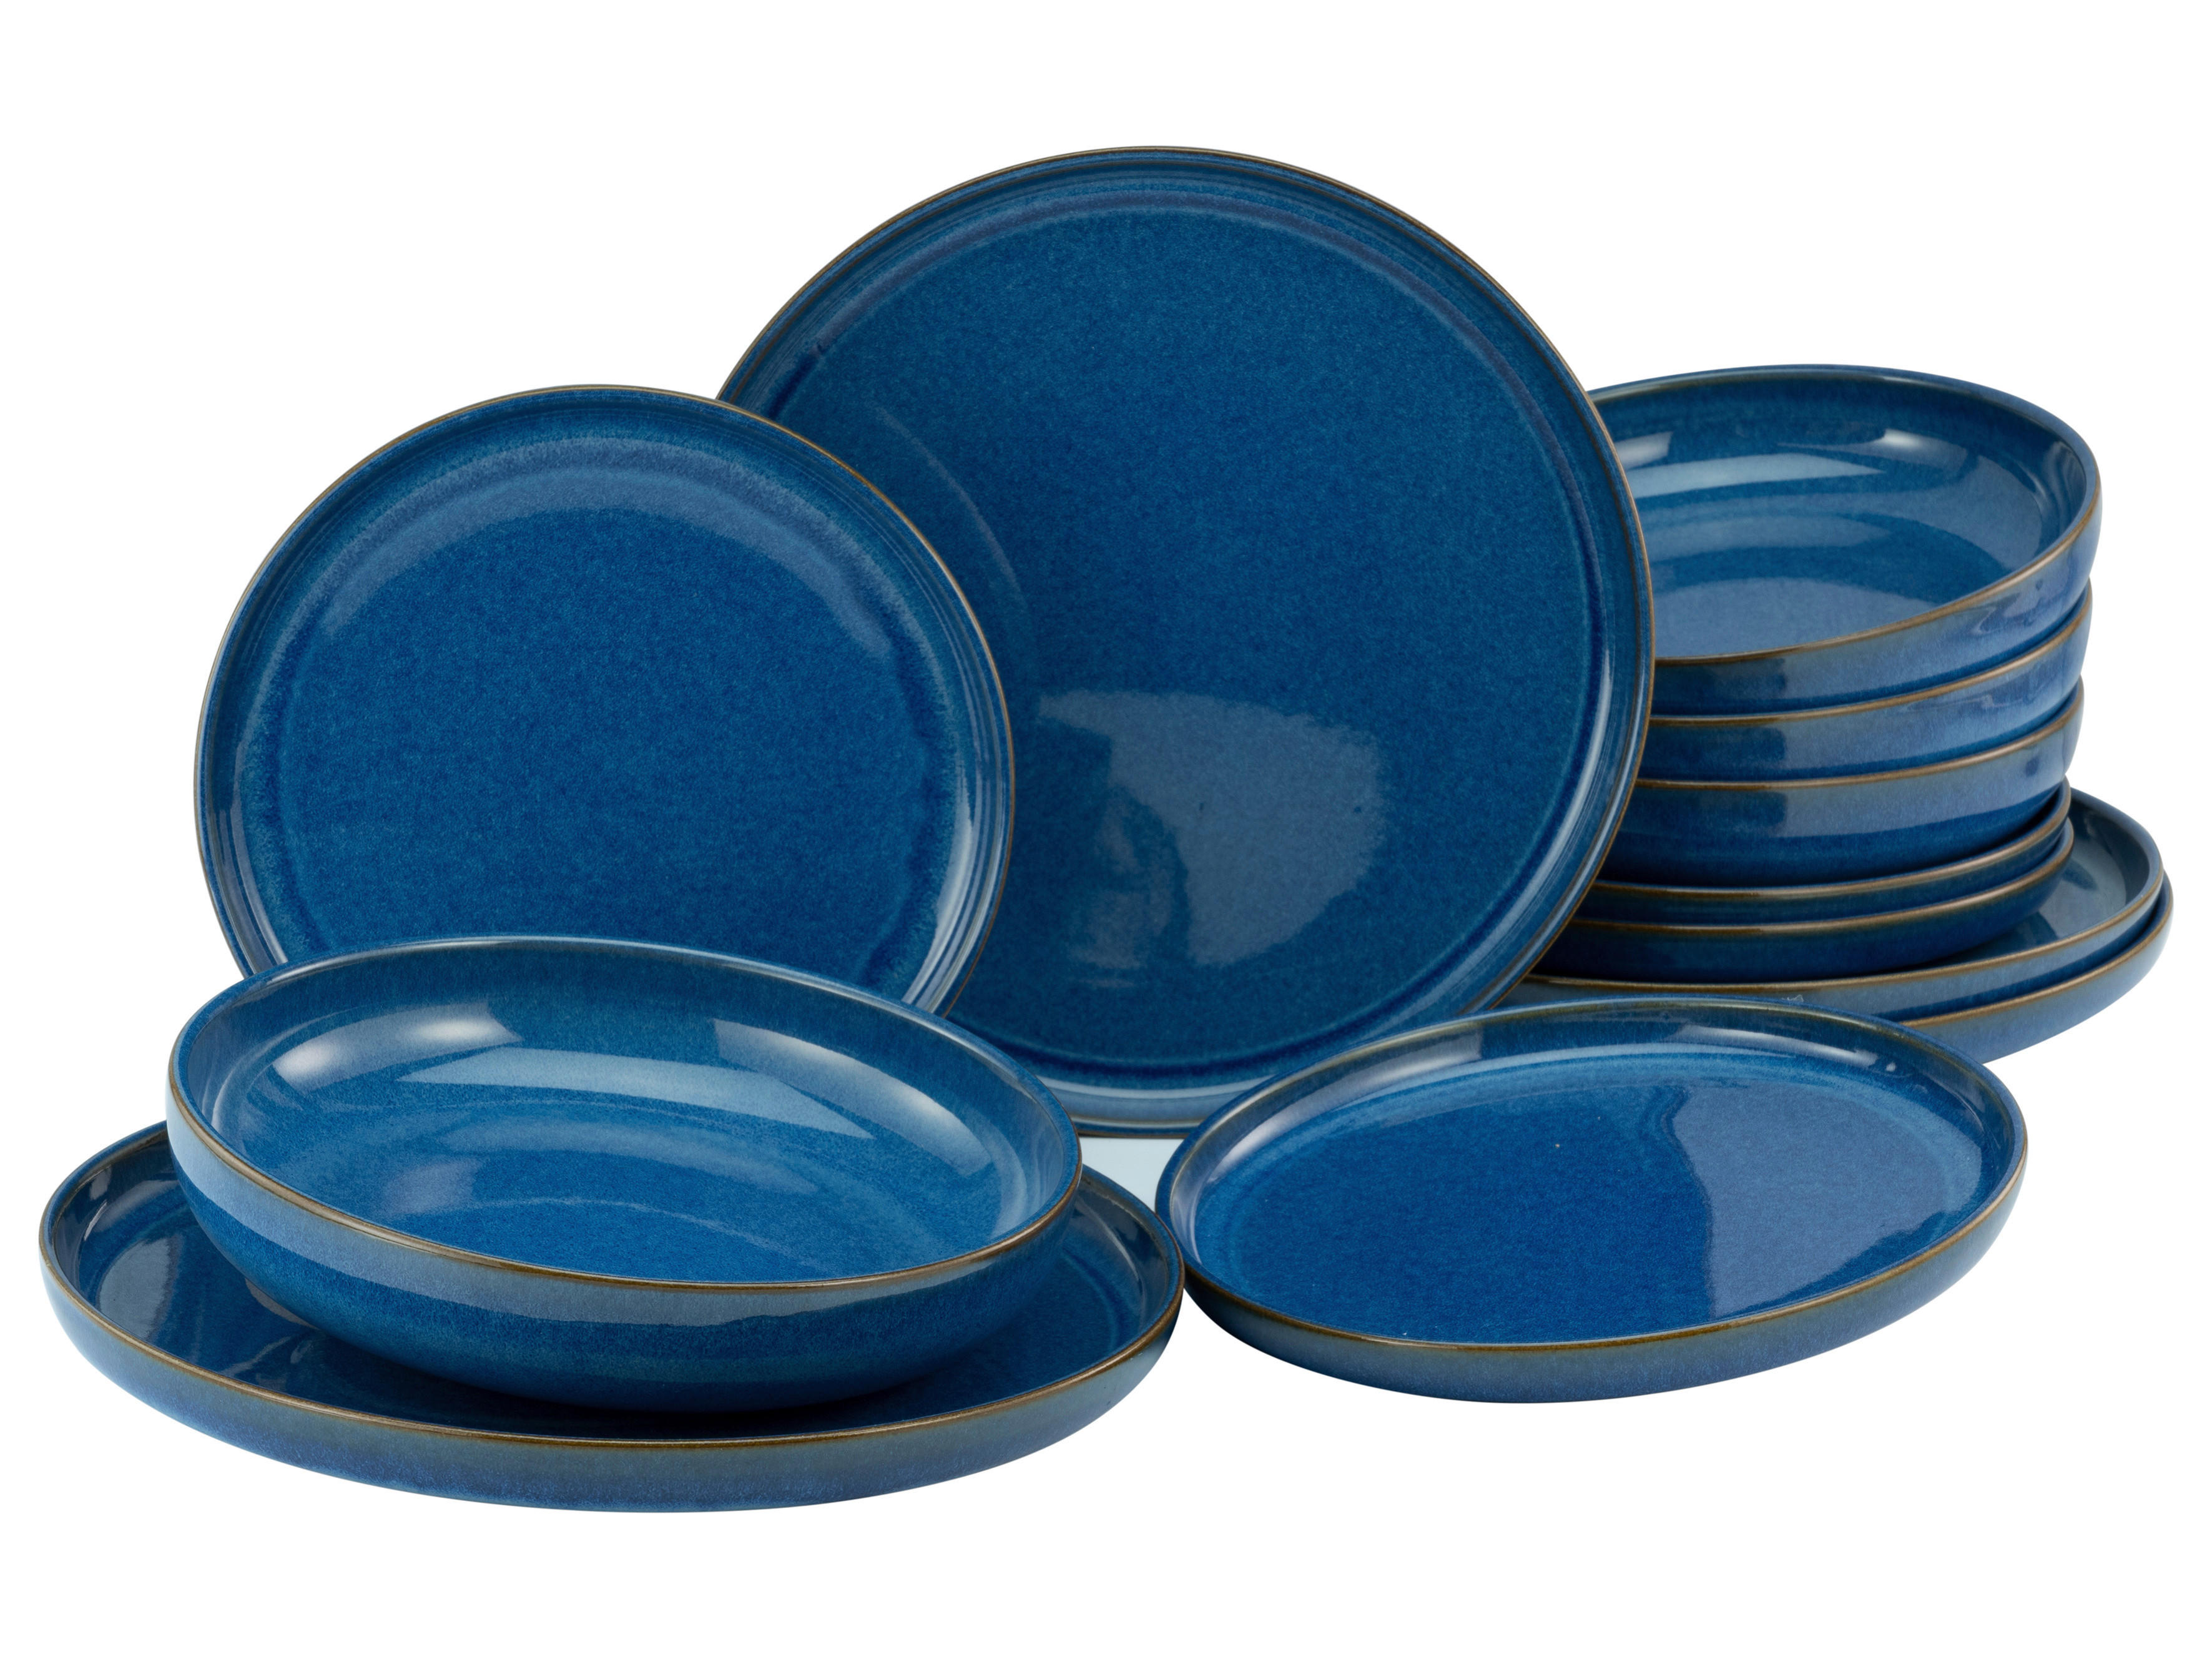 CreaTable Tafelservice blau Steinzeug kaufen POCO uno bei tlg. ATLANTICO 12 ▷ online